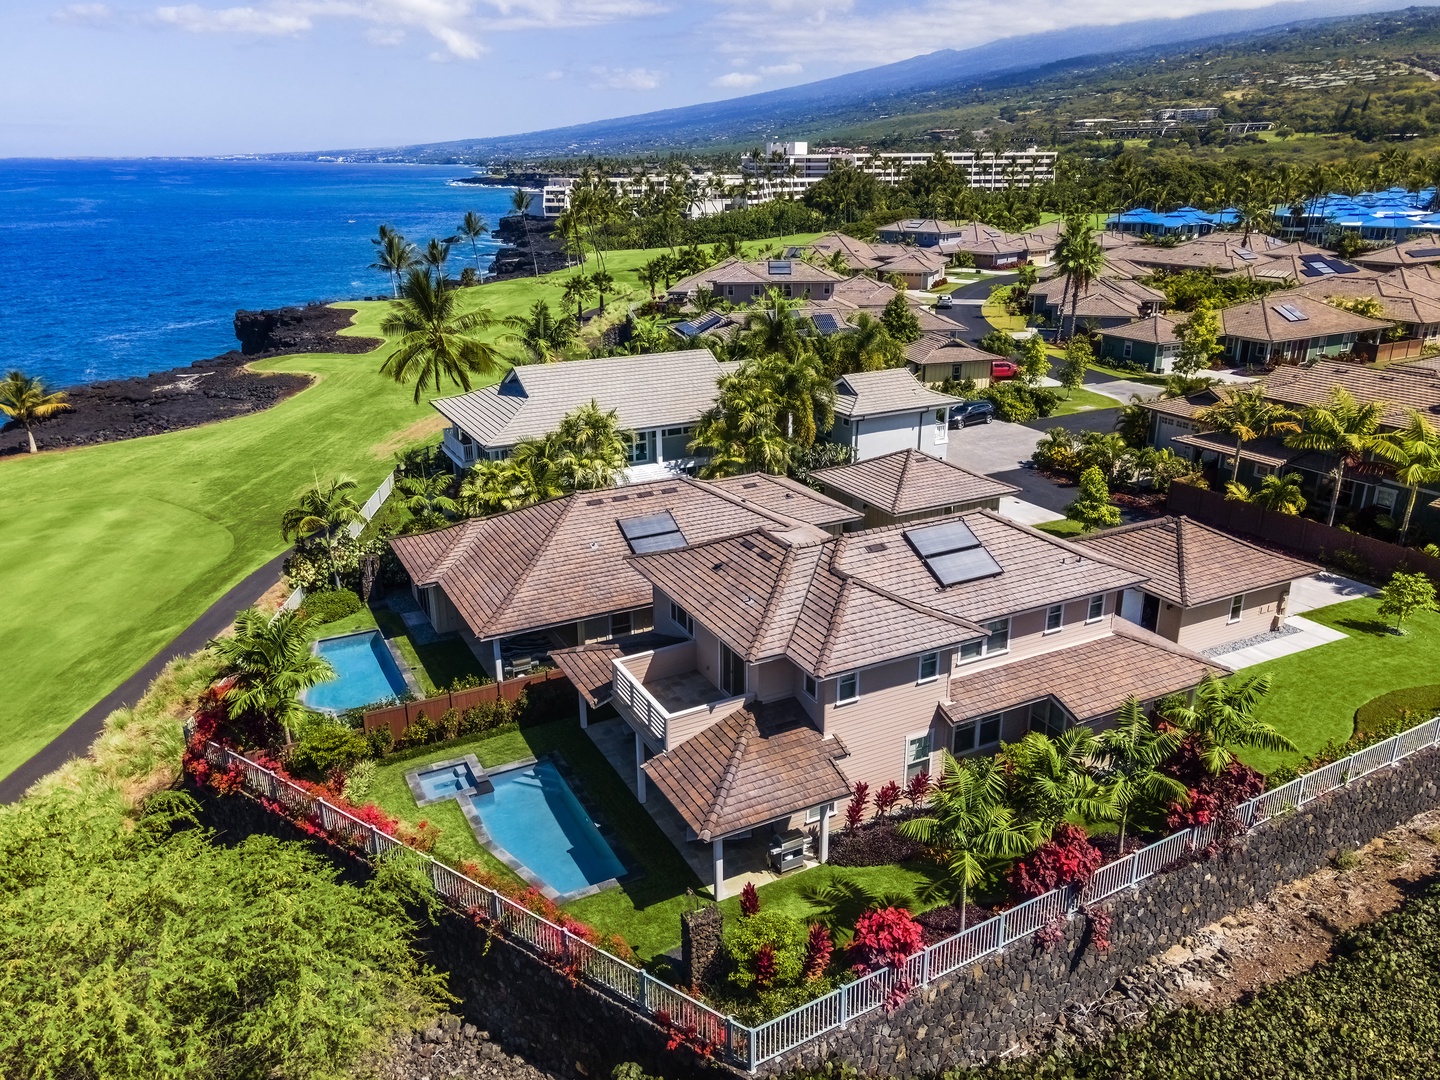 Kailua Kona Vacation Rentals, Blue Orca - Aerial views